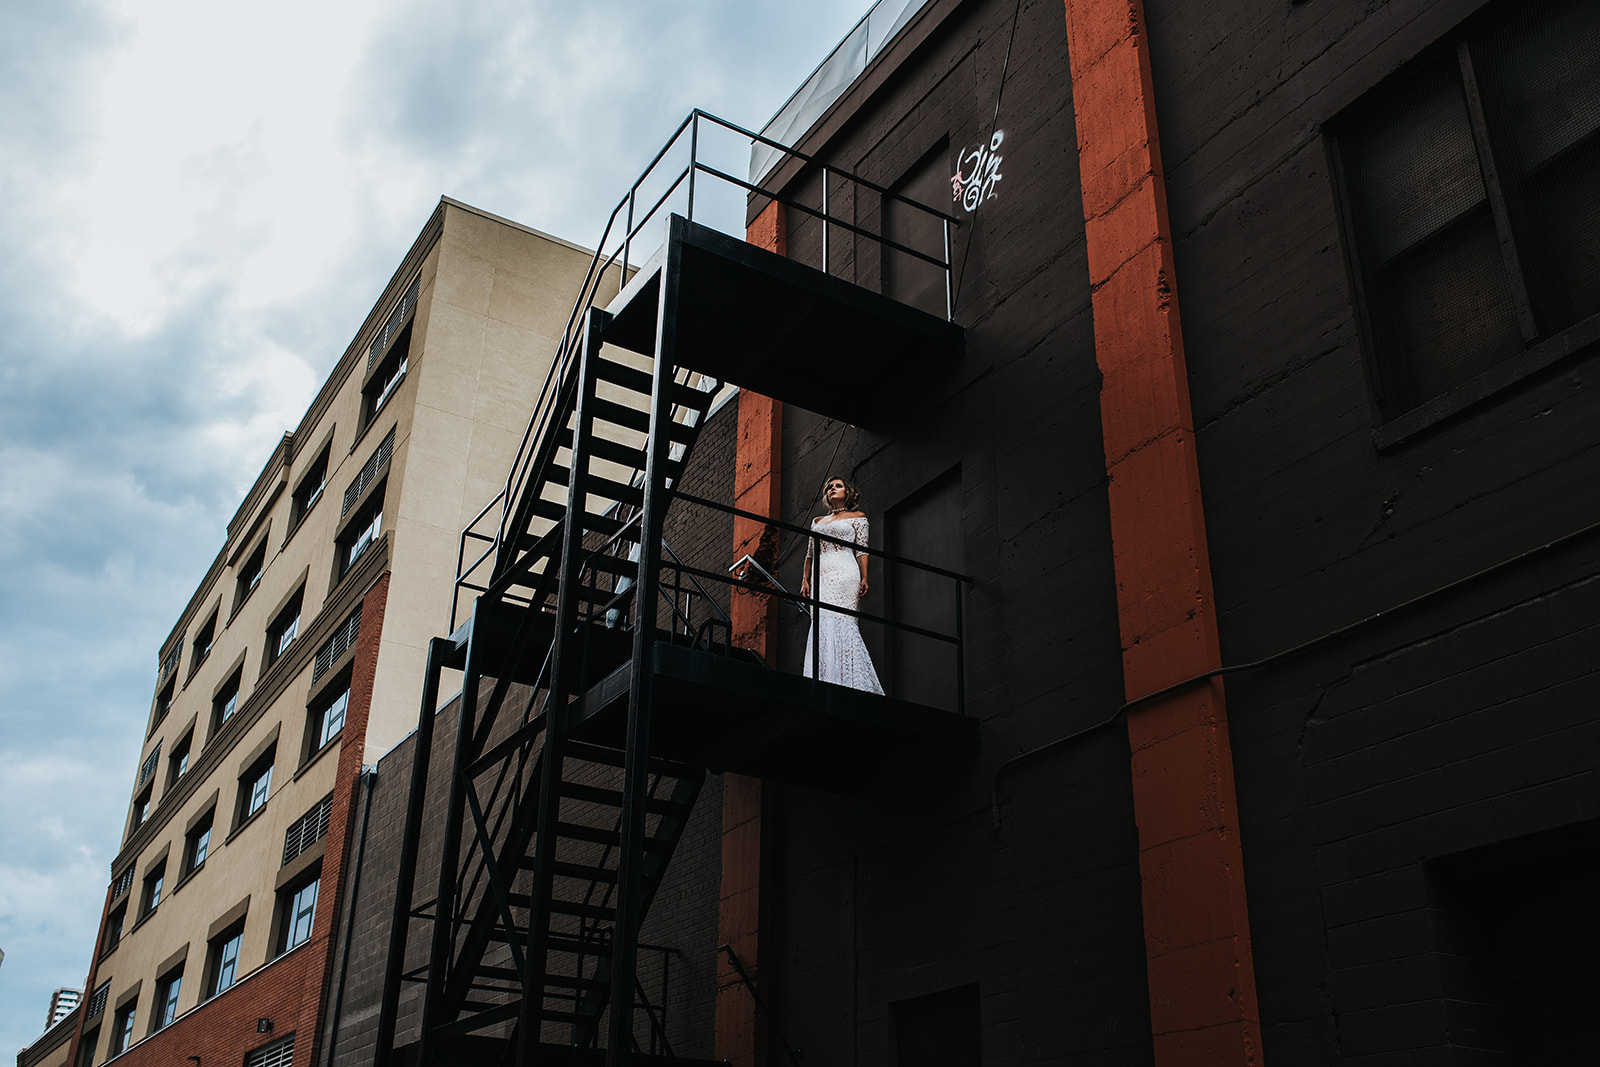 Bridal Portrait Photography Series - NRT Fashion: Capturing Urban Elegance